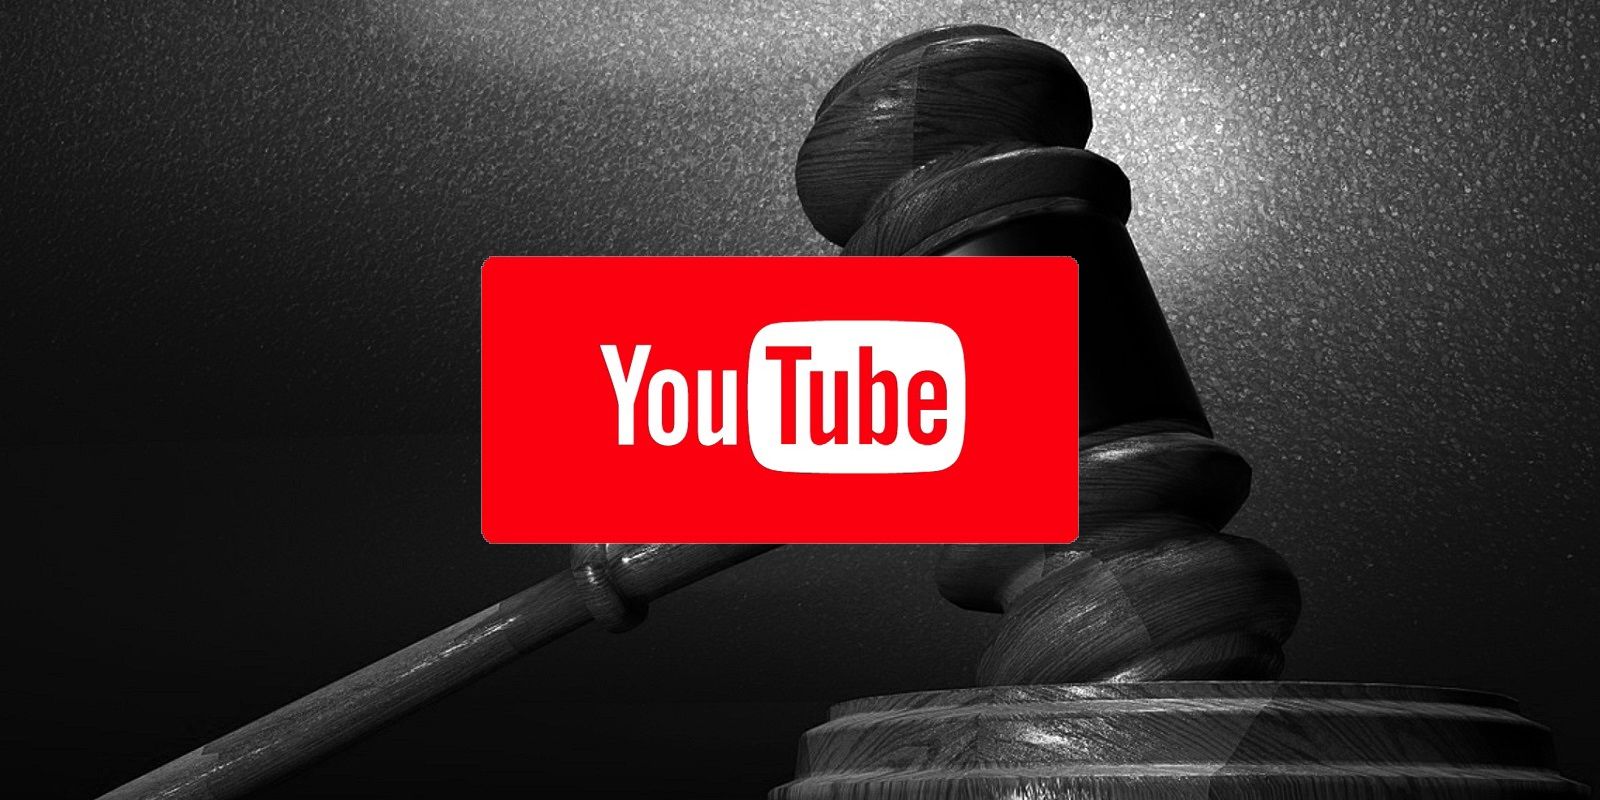 YouTube law hammer